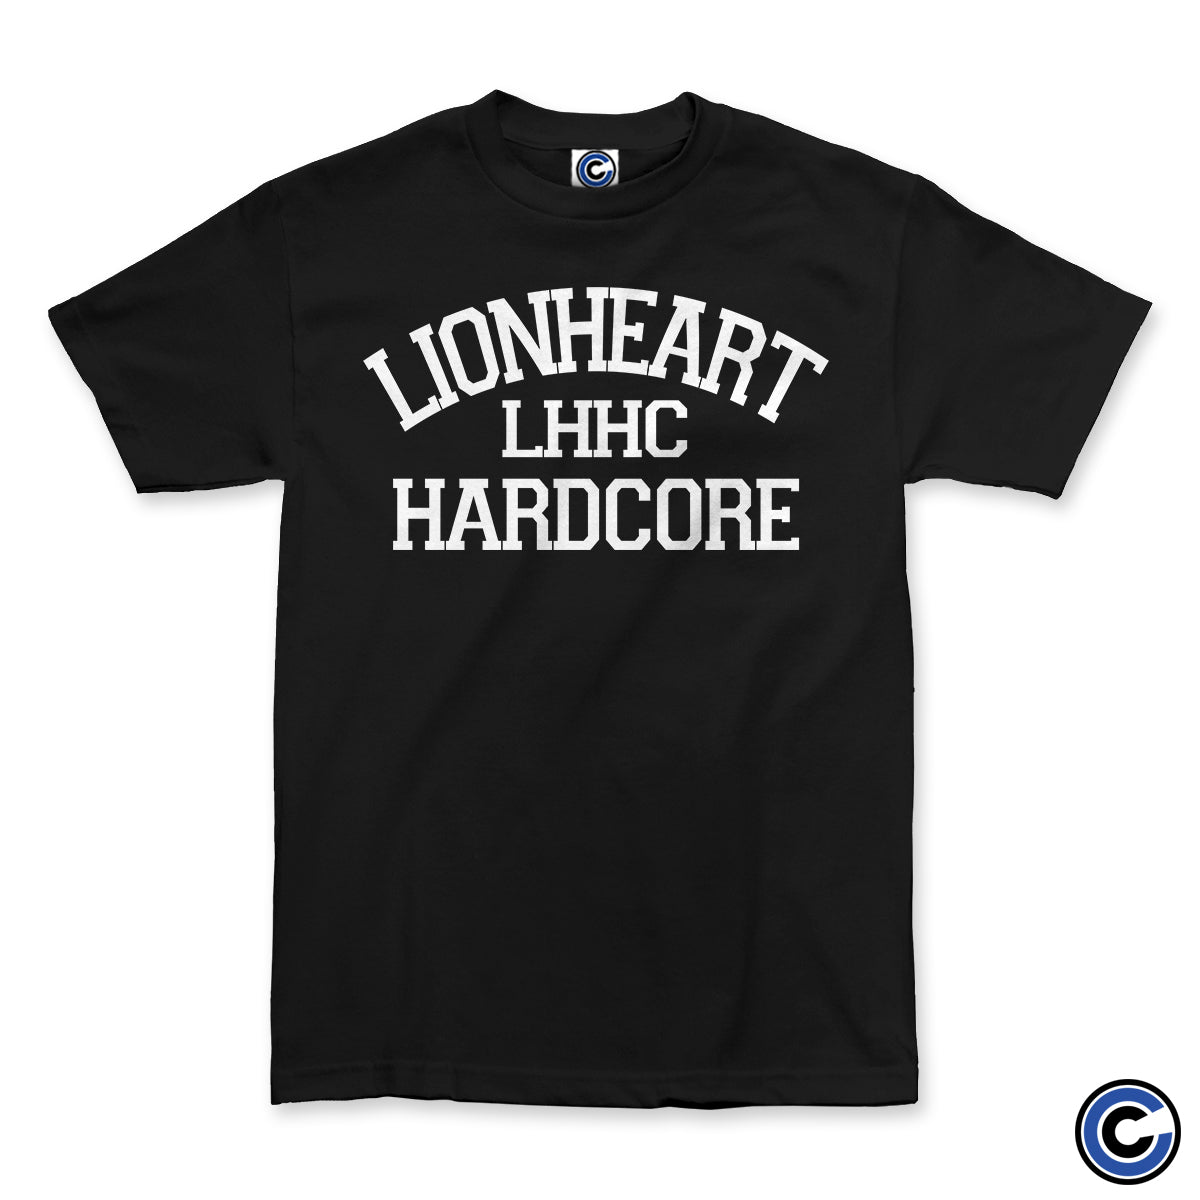 Lionheart "Stacked" Shirt